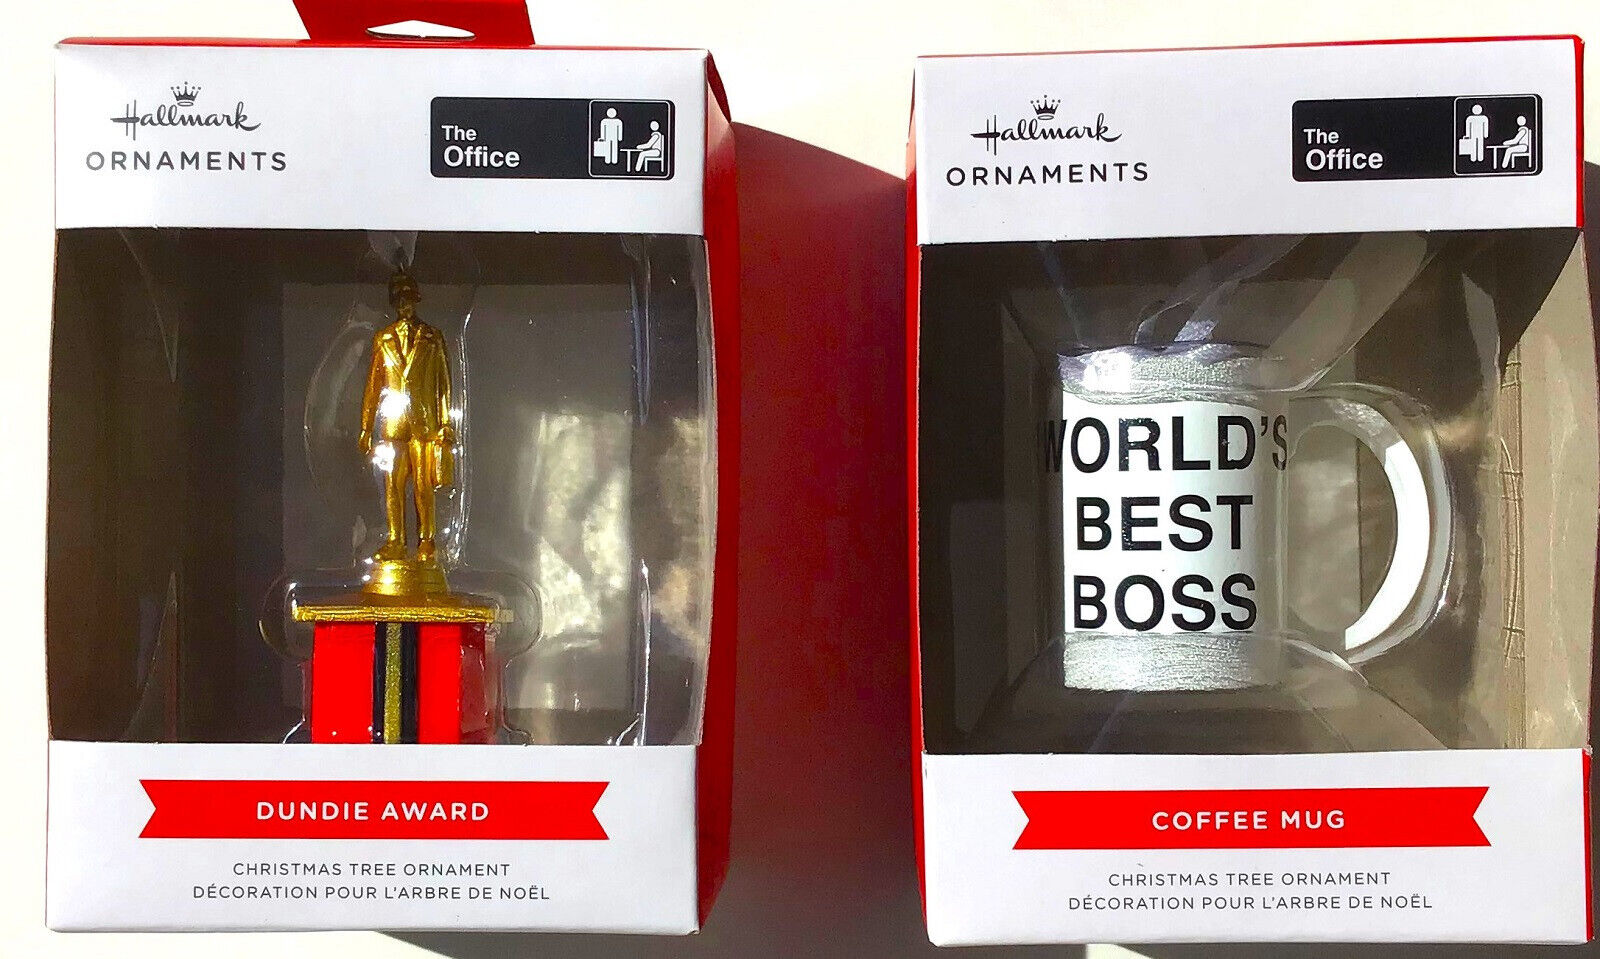 Hallmark Ornaments The Office Dundie Award and Coffee Mug, Set of 2 